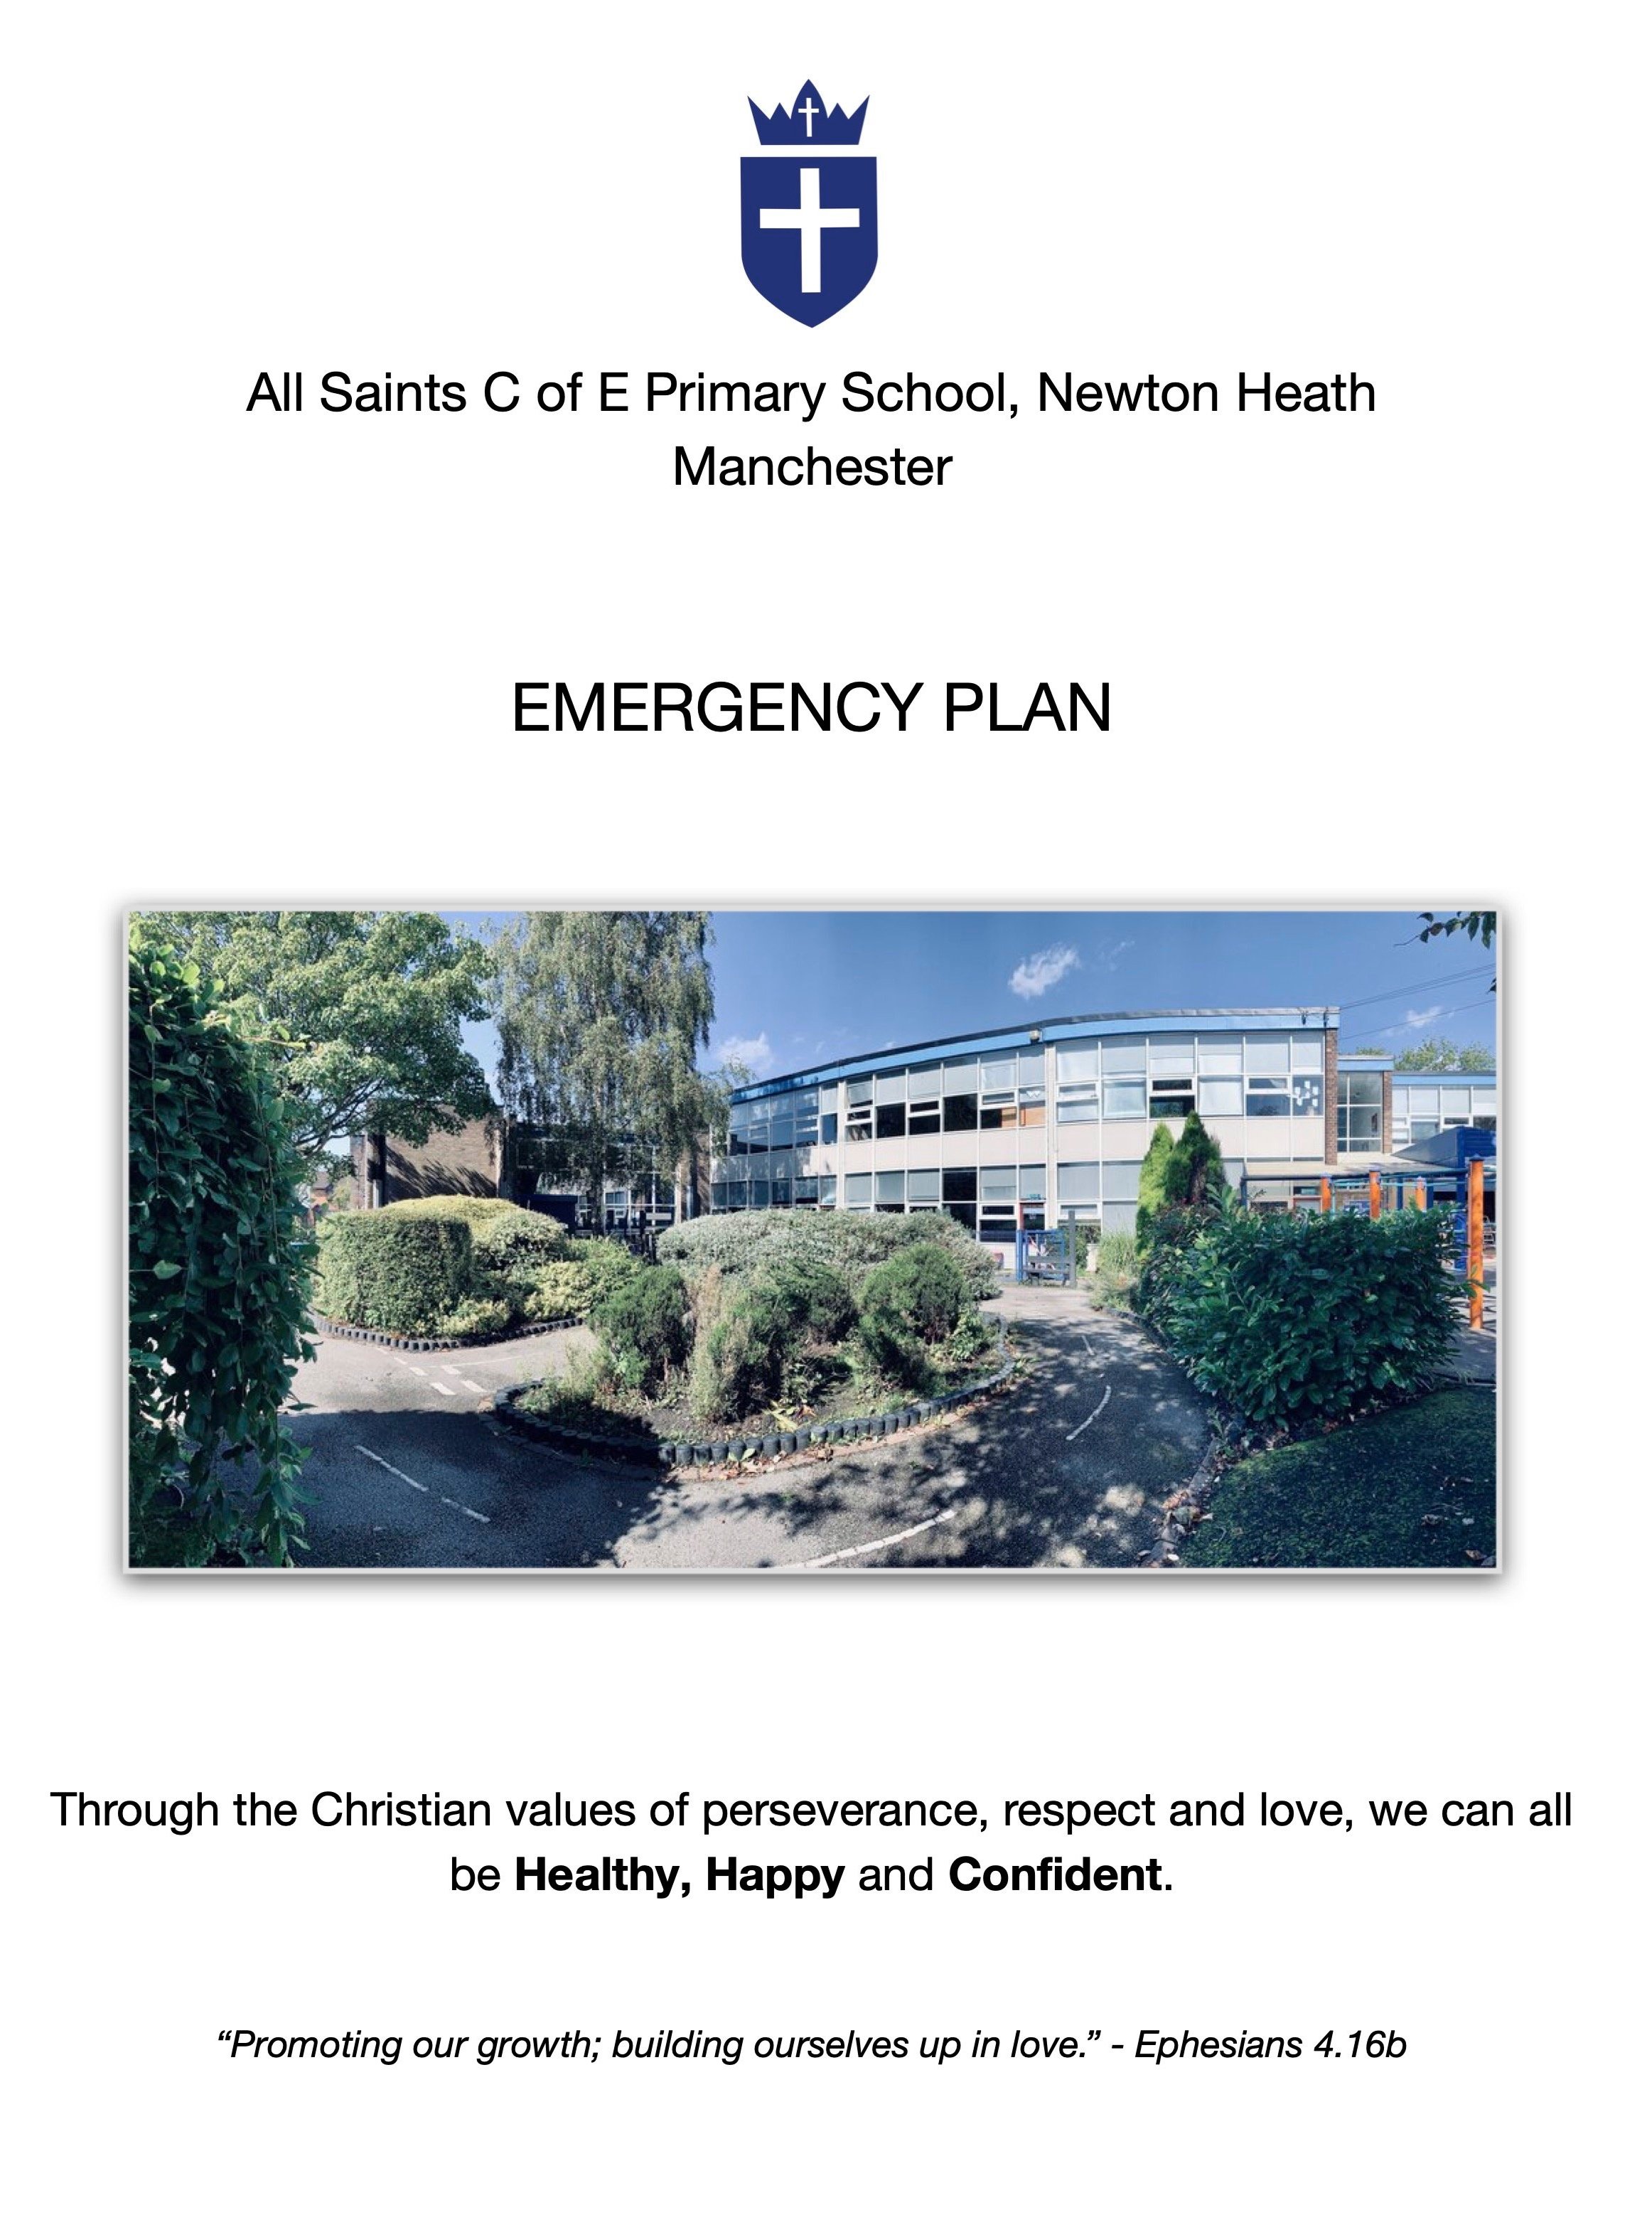 School+Emergency+Plan.jpg